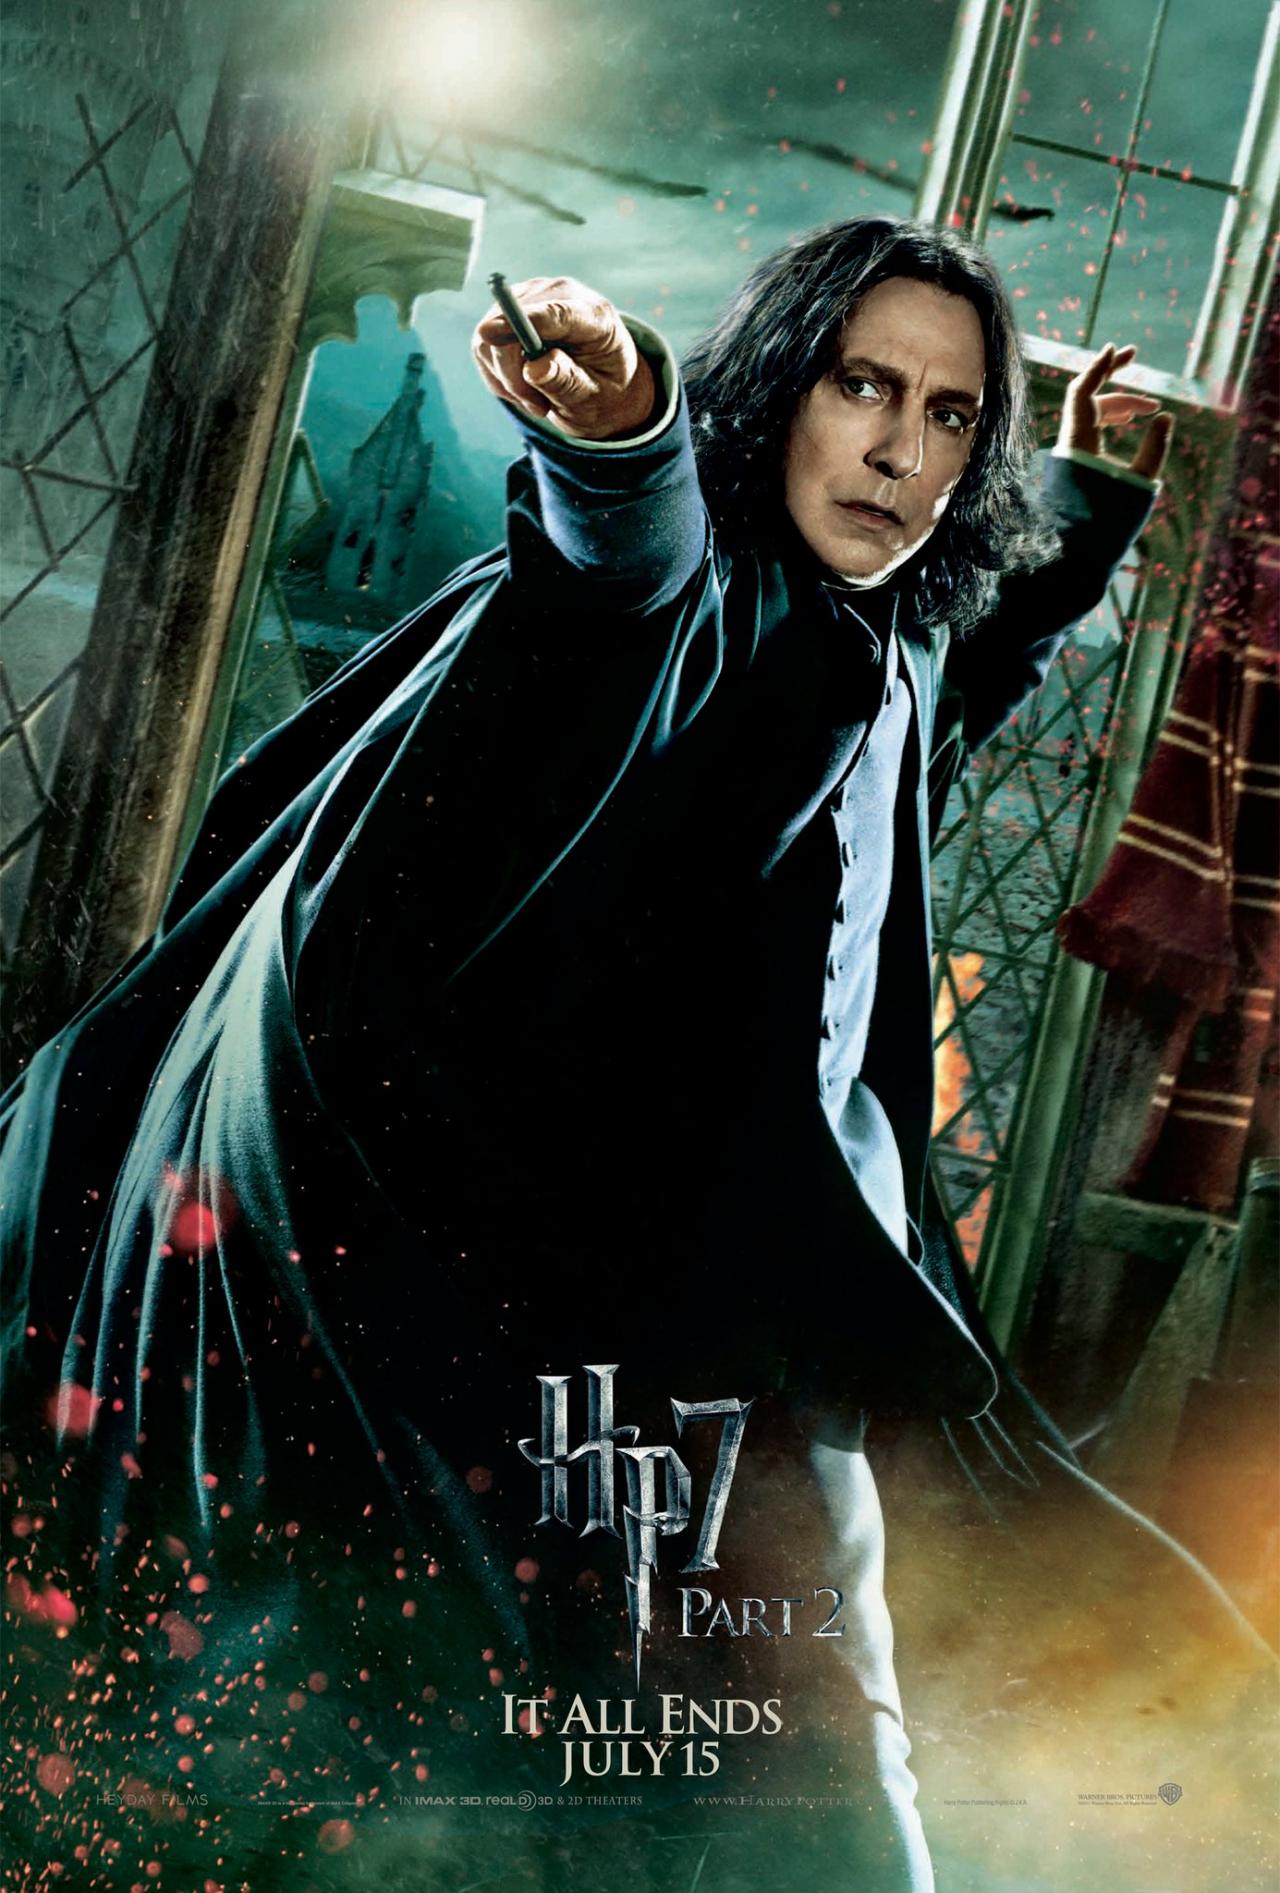 Wallpaper HP7 Part 2 poster - Snape Harry Potter